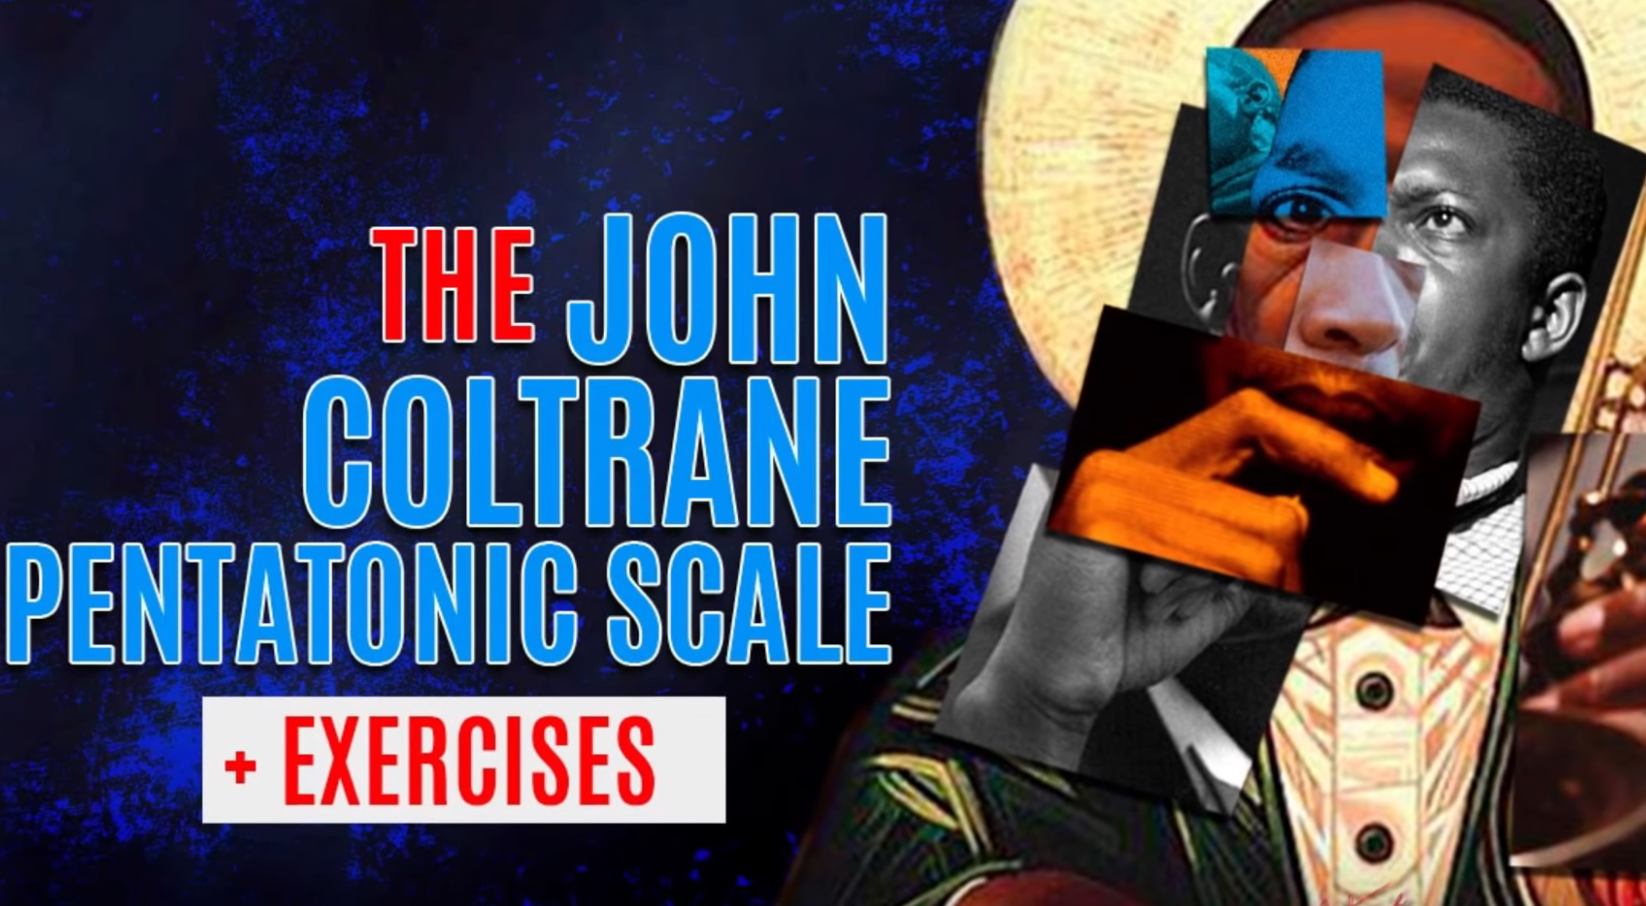 The John Coltrane pentatonic exercises and applications